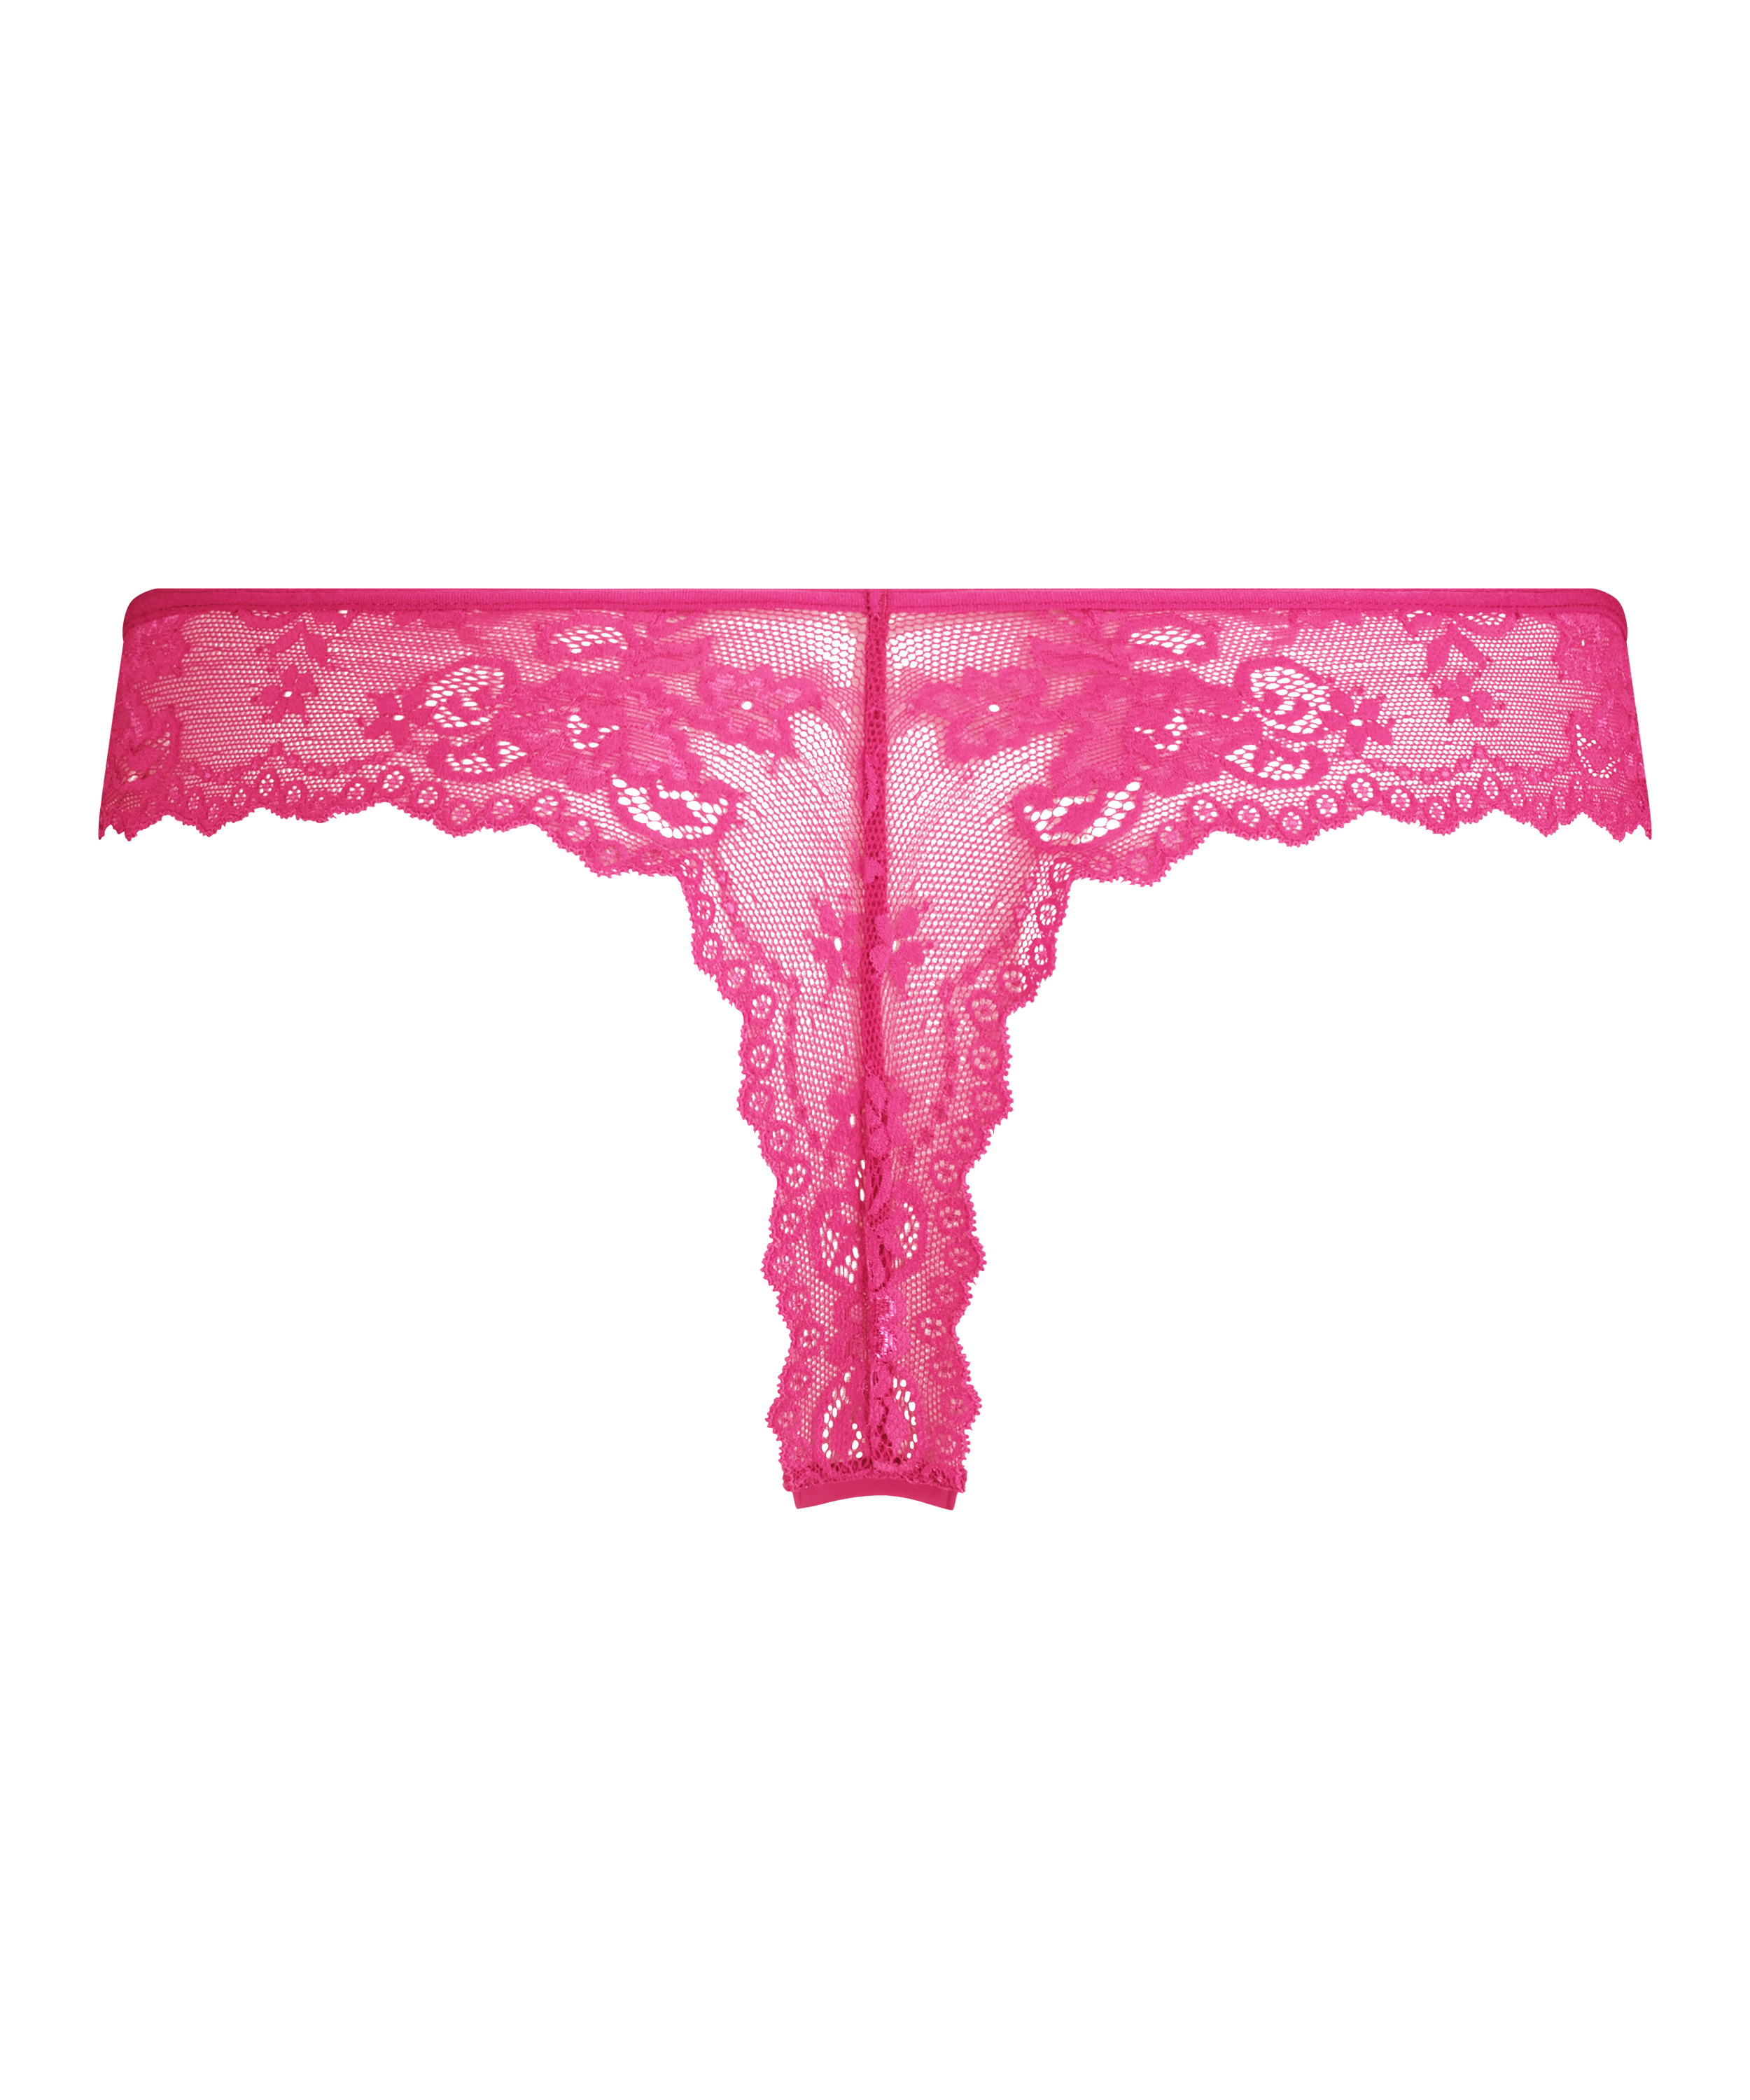 Lace Back Invisible Thong, Pink, main